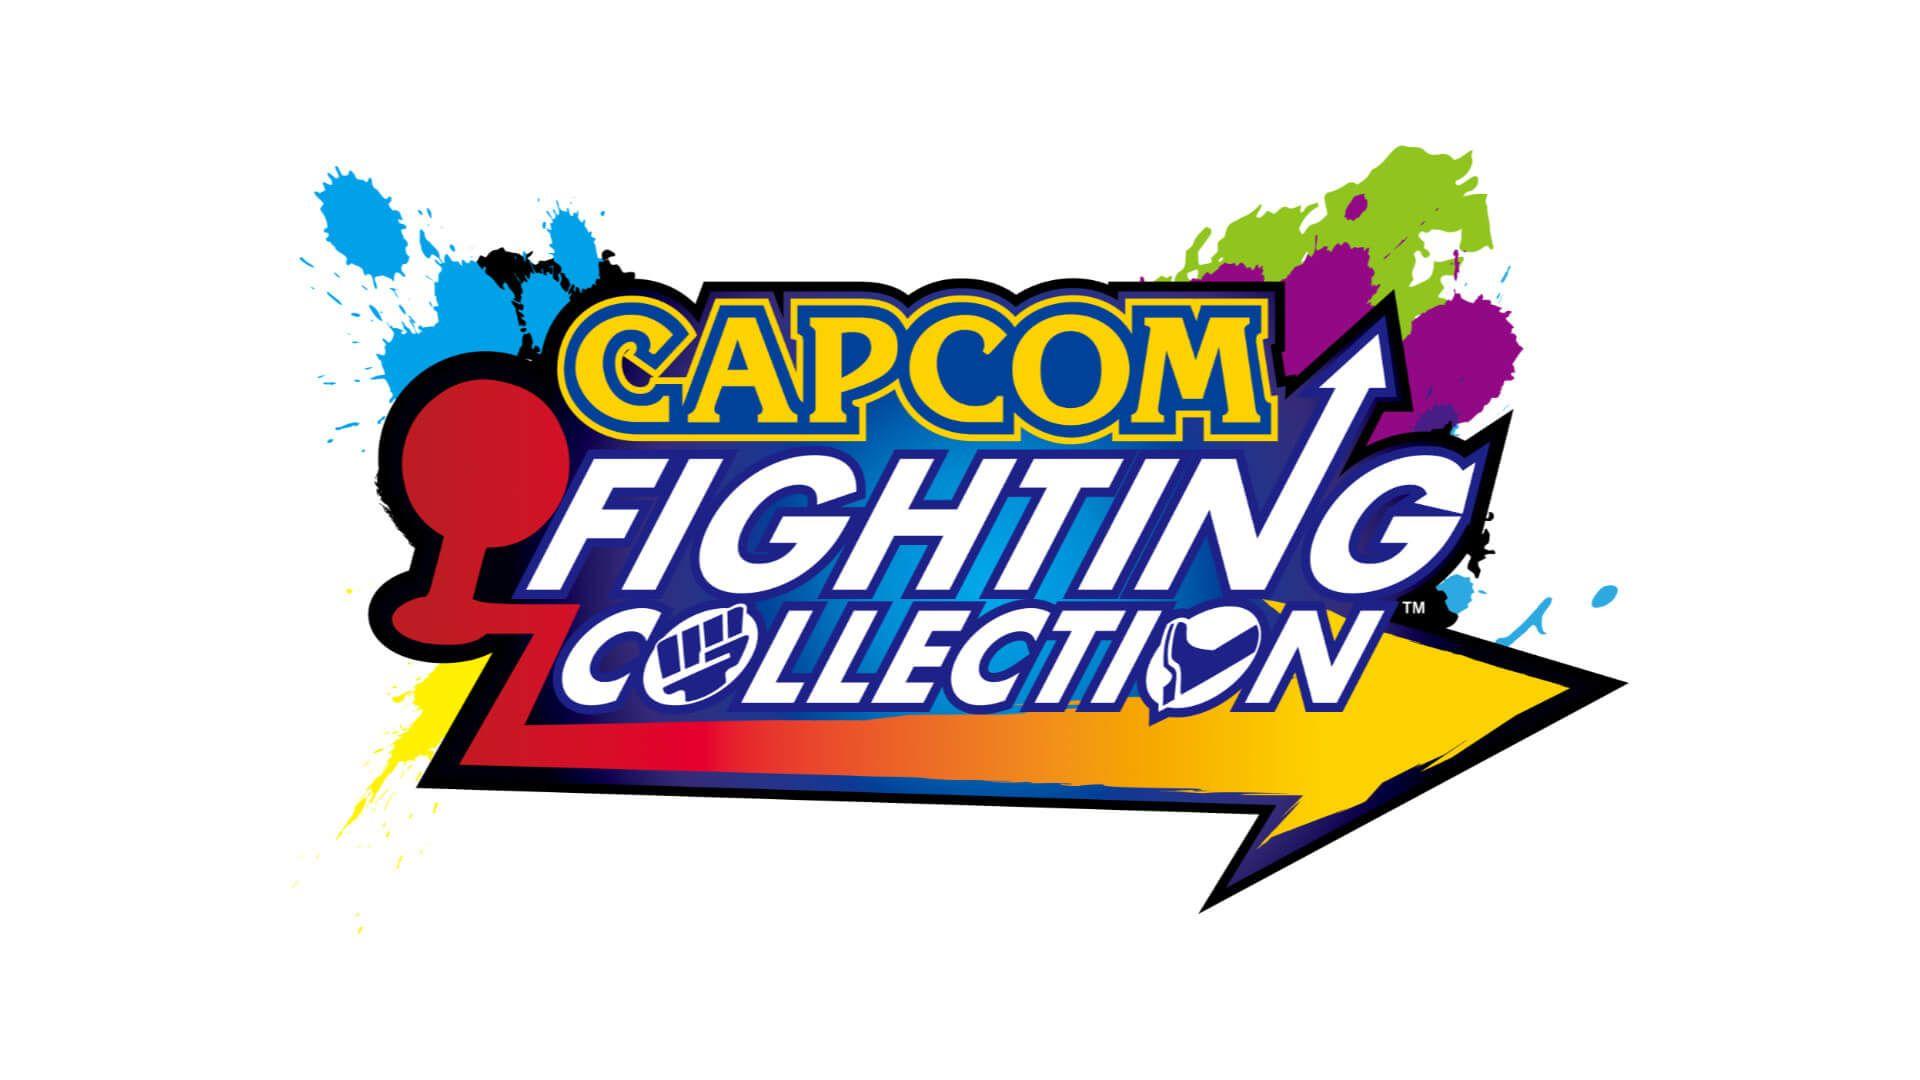 capcom fighting collection logo